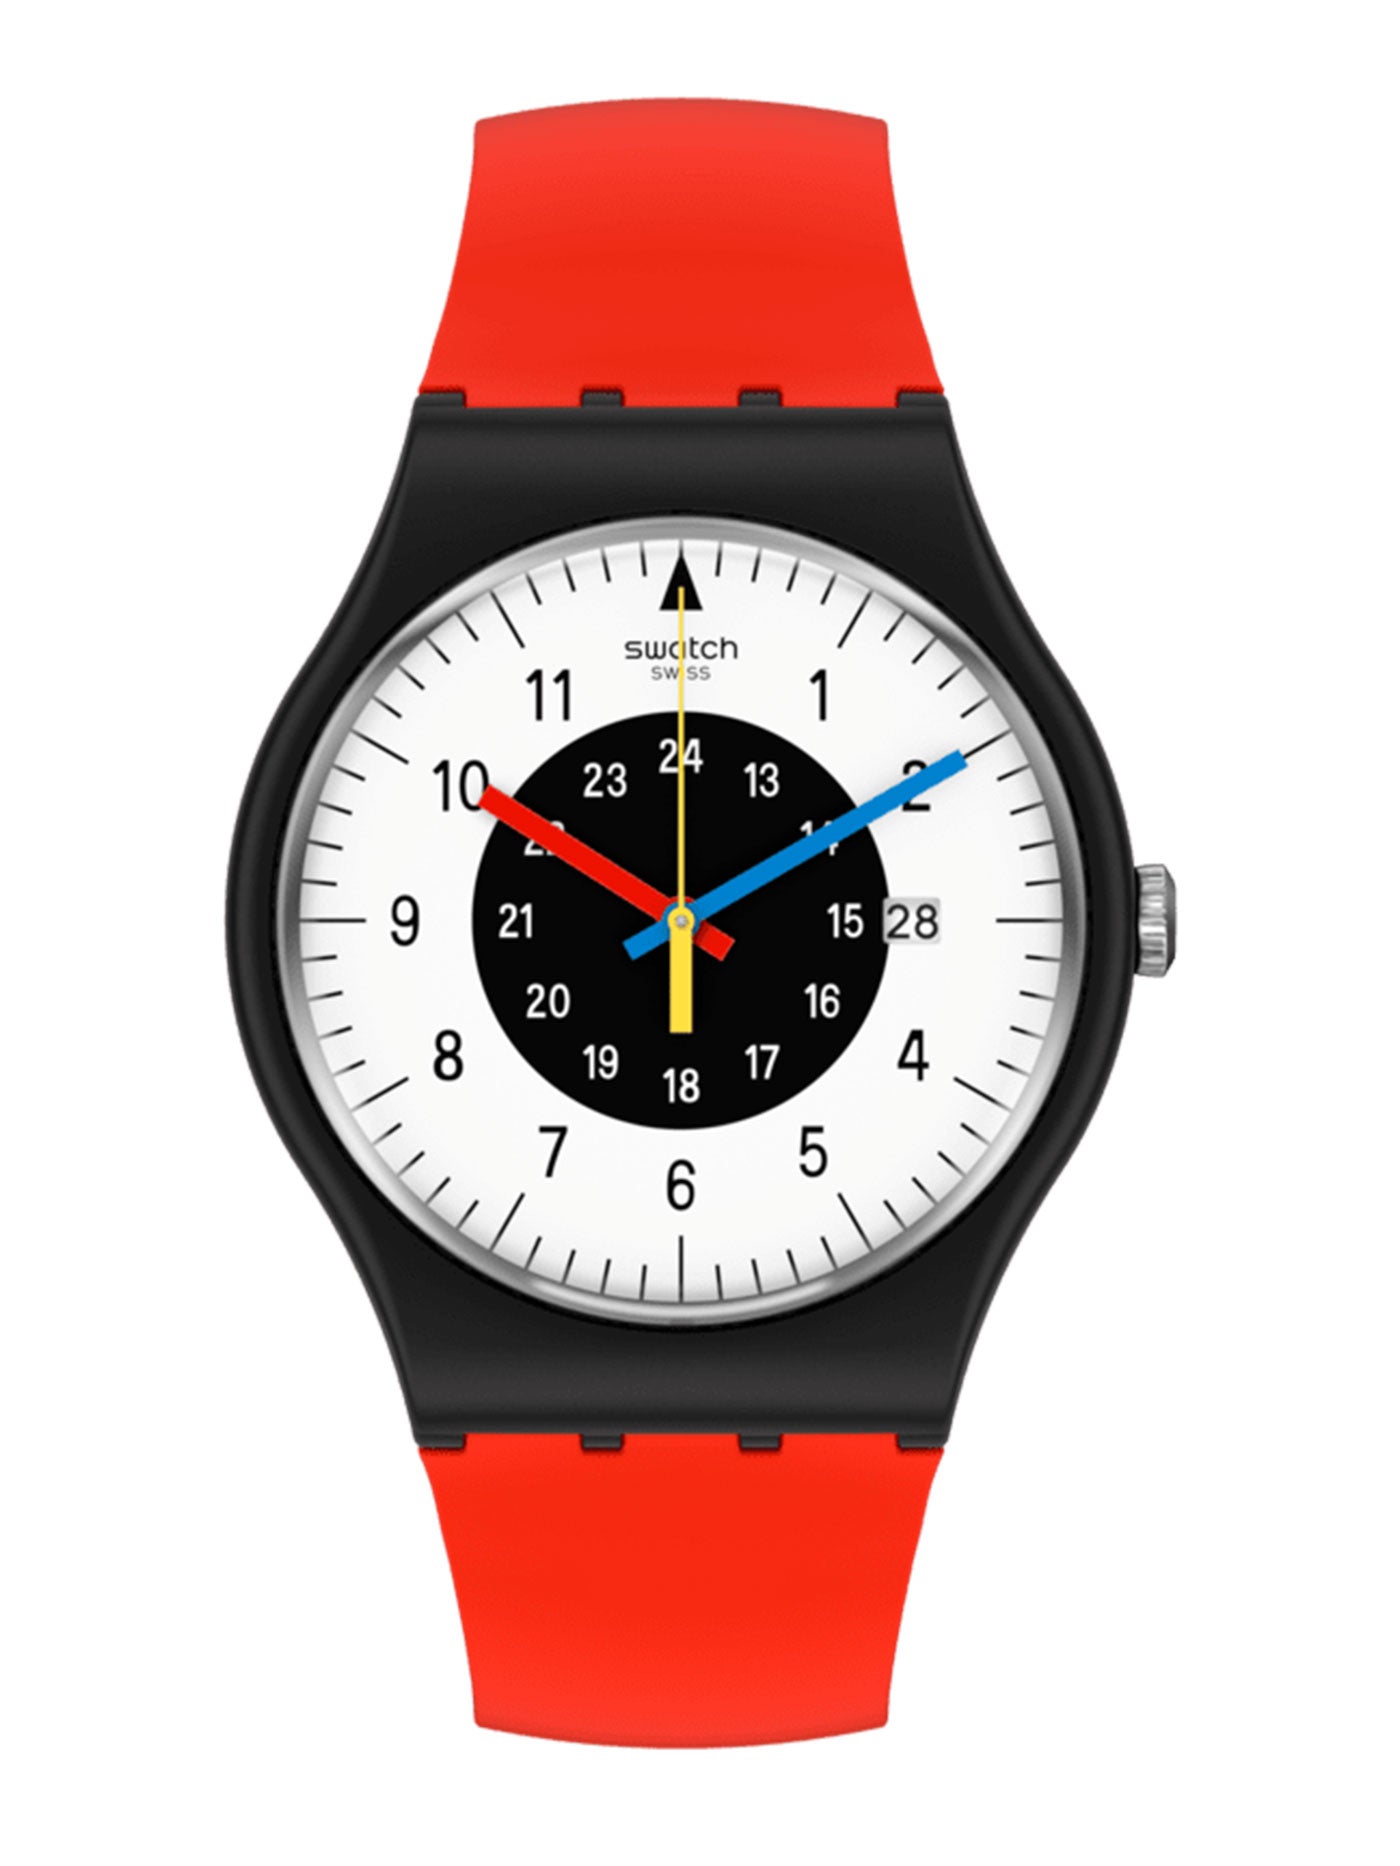 Swatch Rouge Et Noir Watch